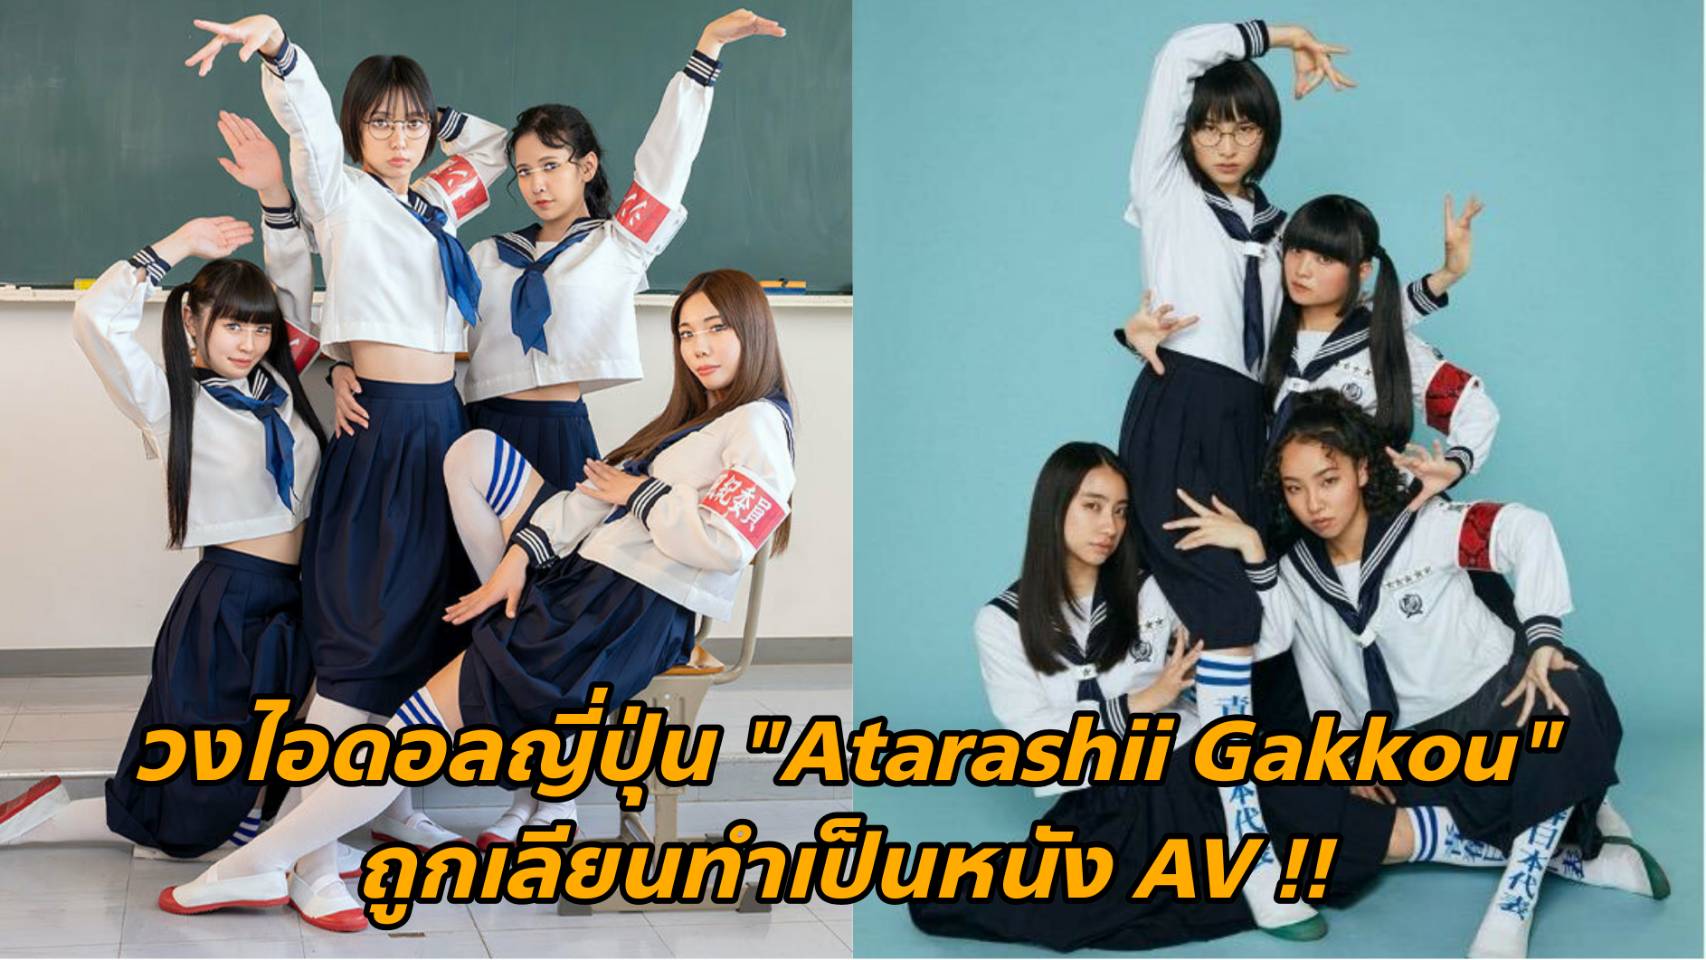 [HUNTC-006] วงไอดอลญี่ปุ่น "Atarashii Gakkou" ถูกเลียนทำเป็นหนัง AV 4